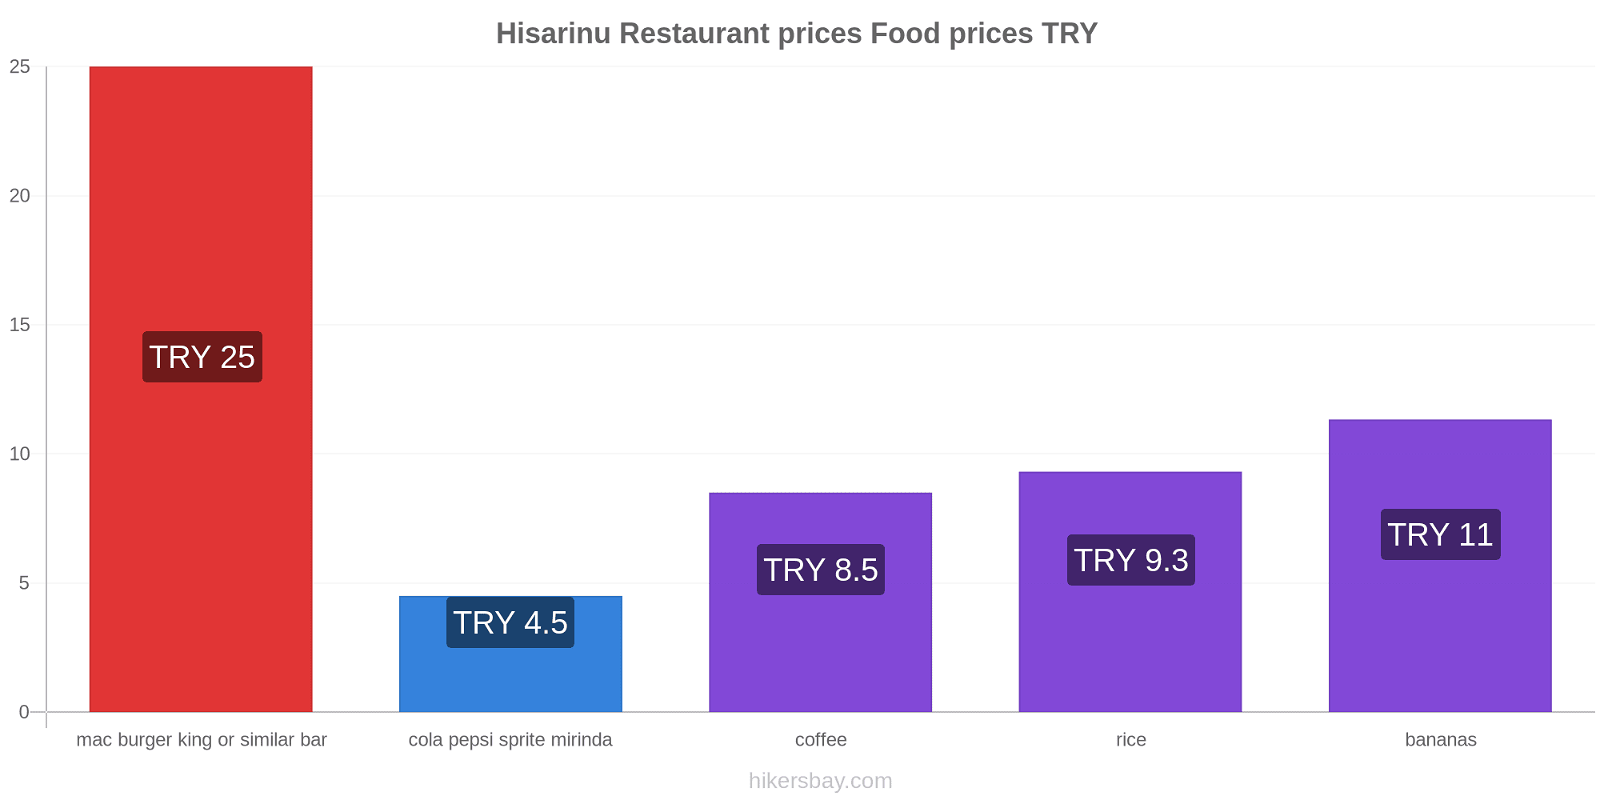 Hisarinu price changes hikersbay.com